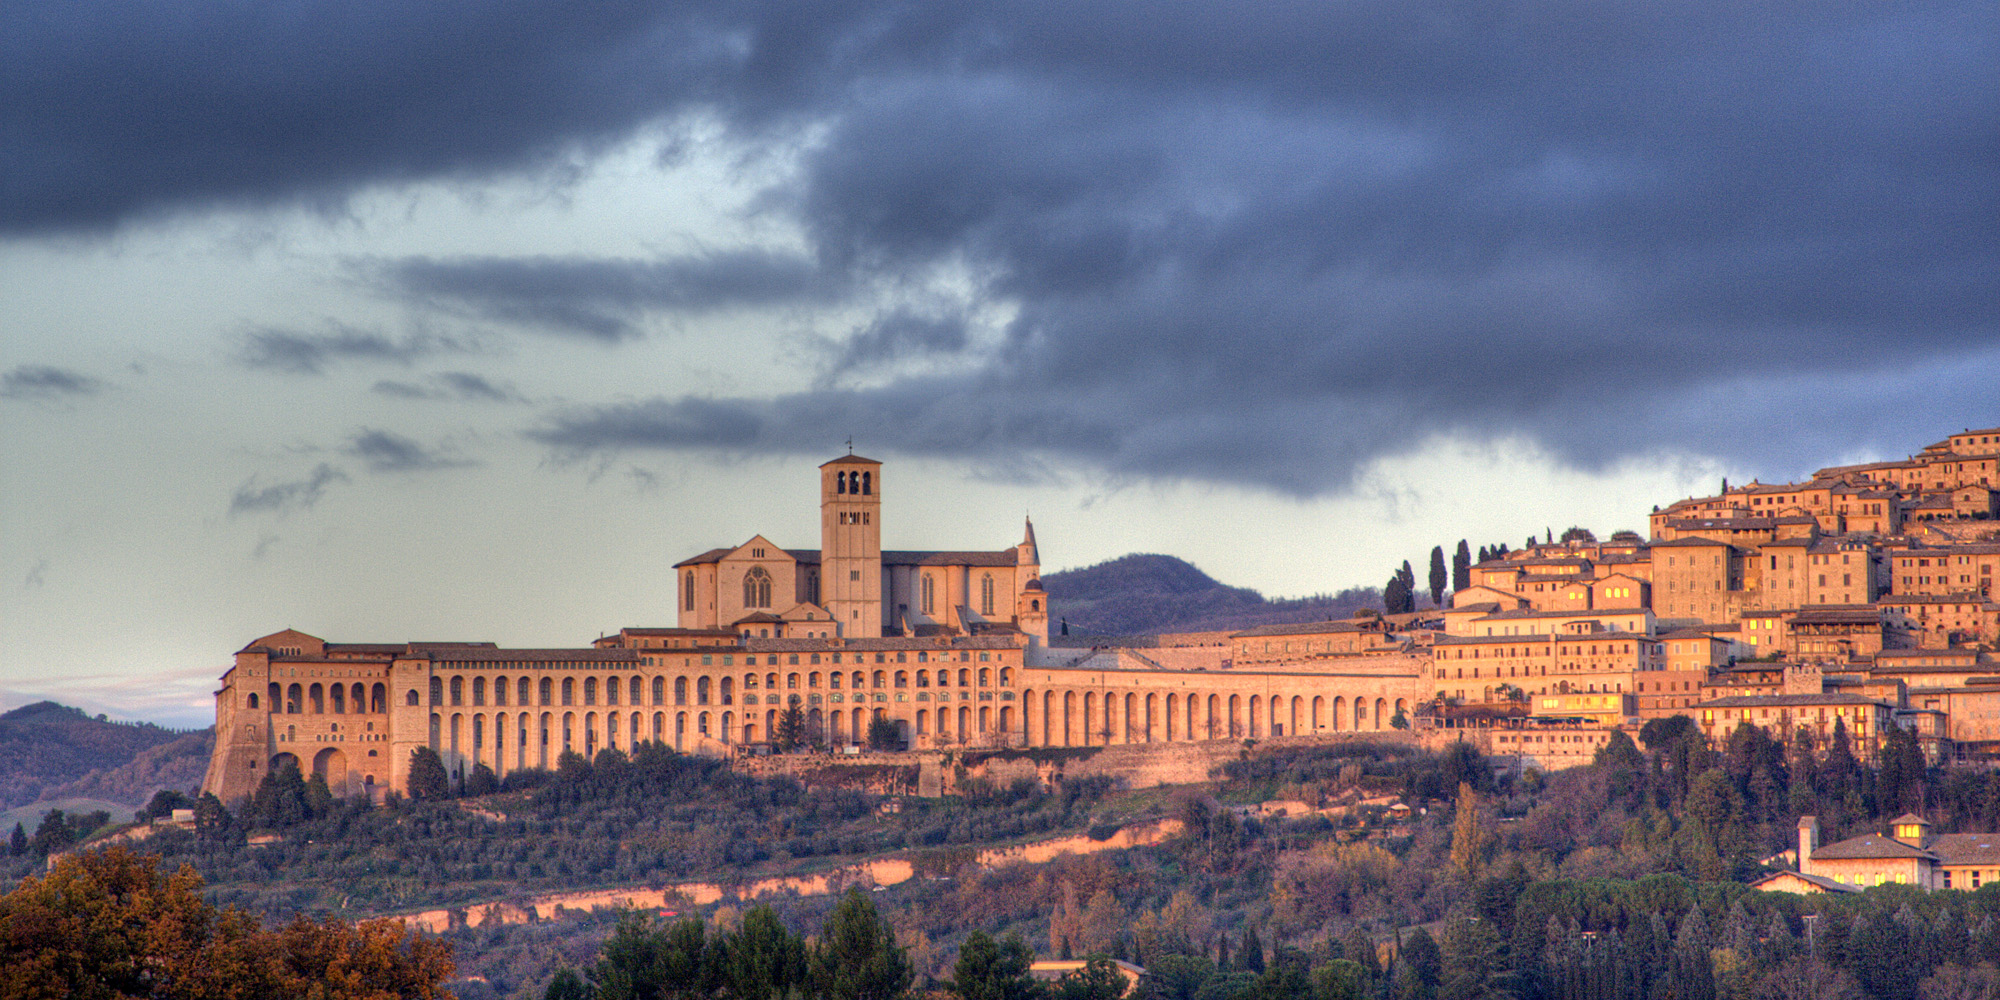 Assisi skyline